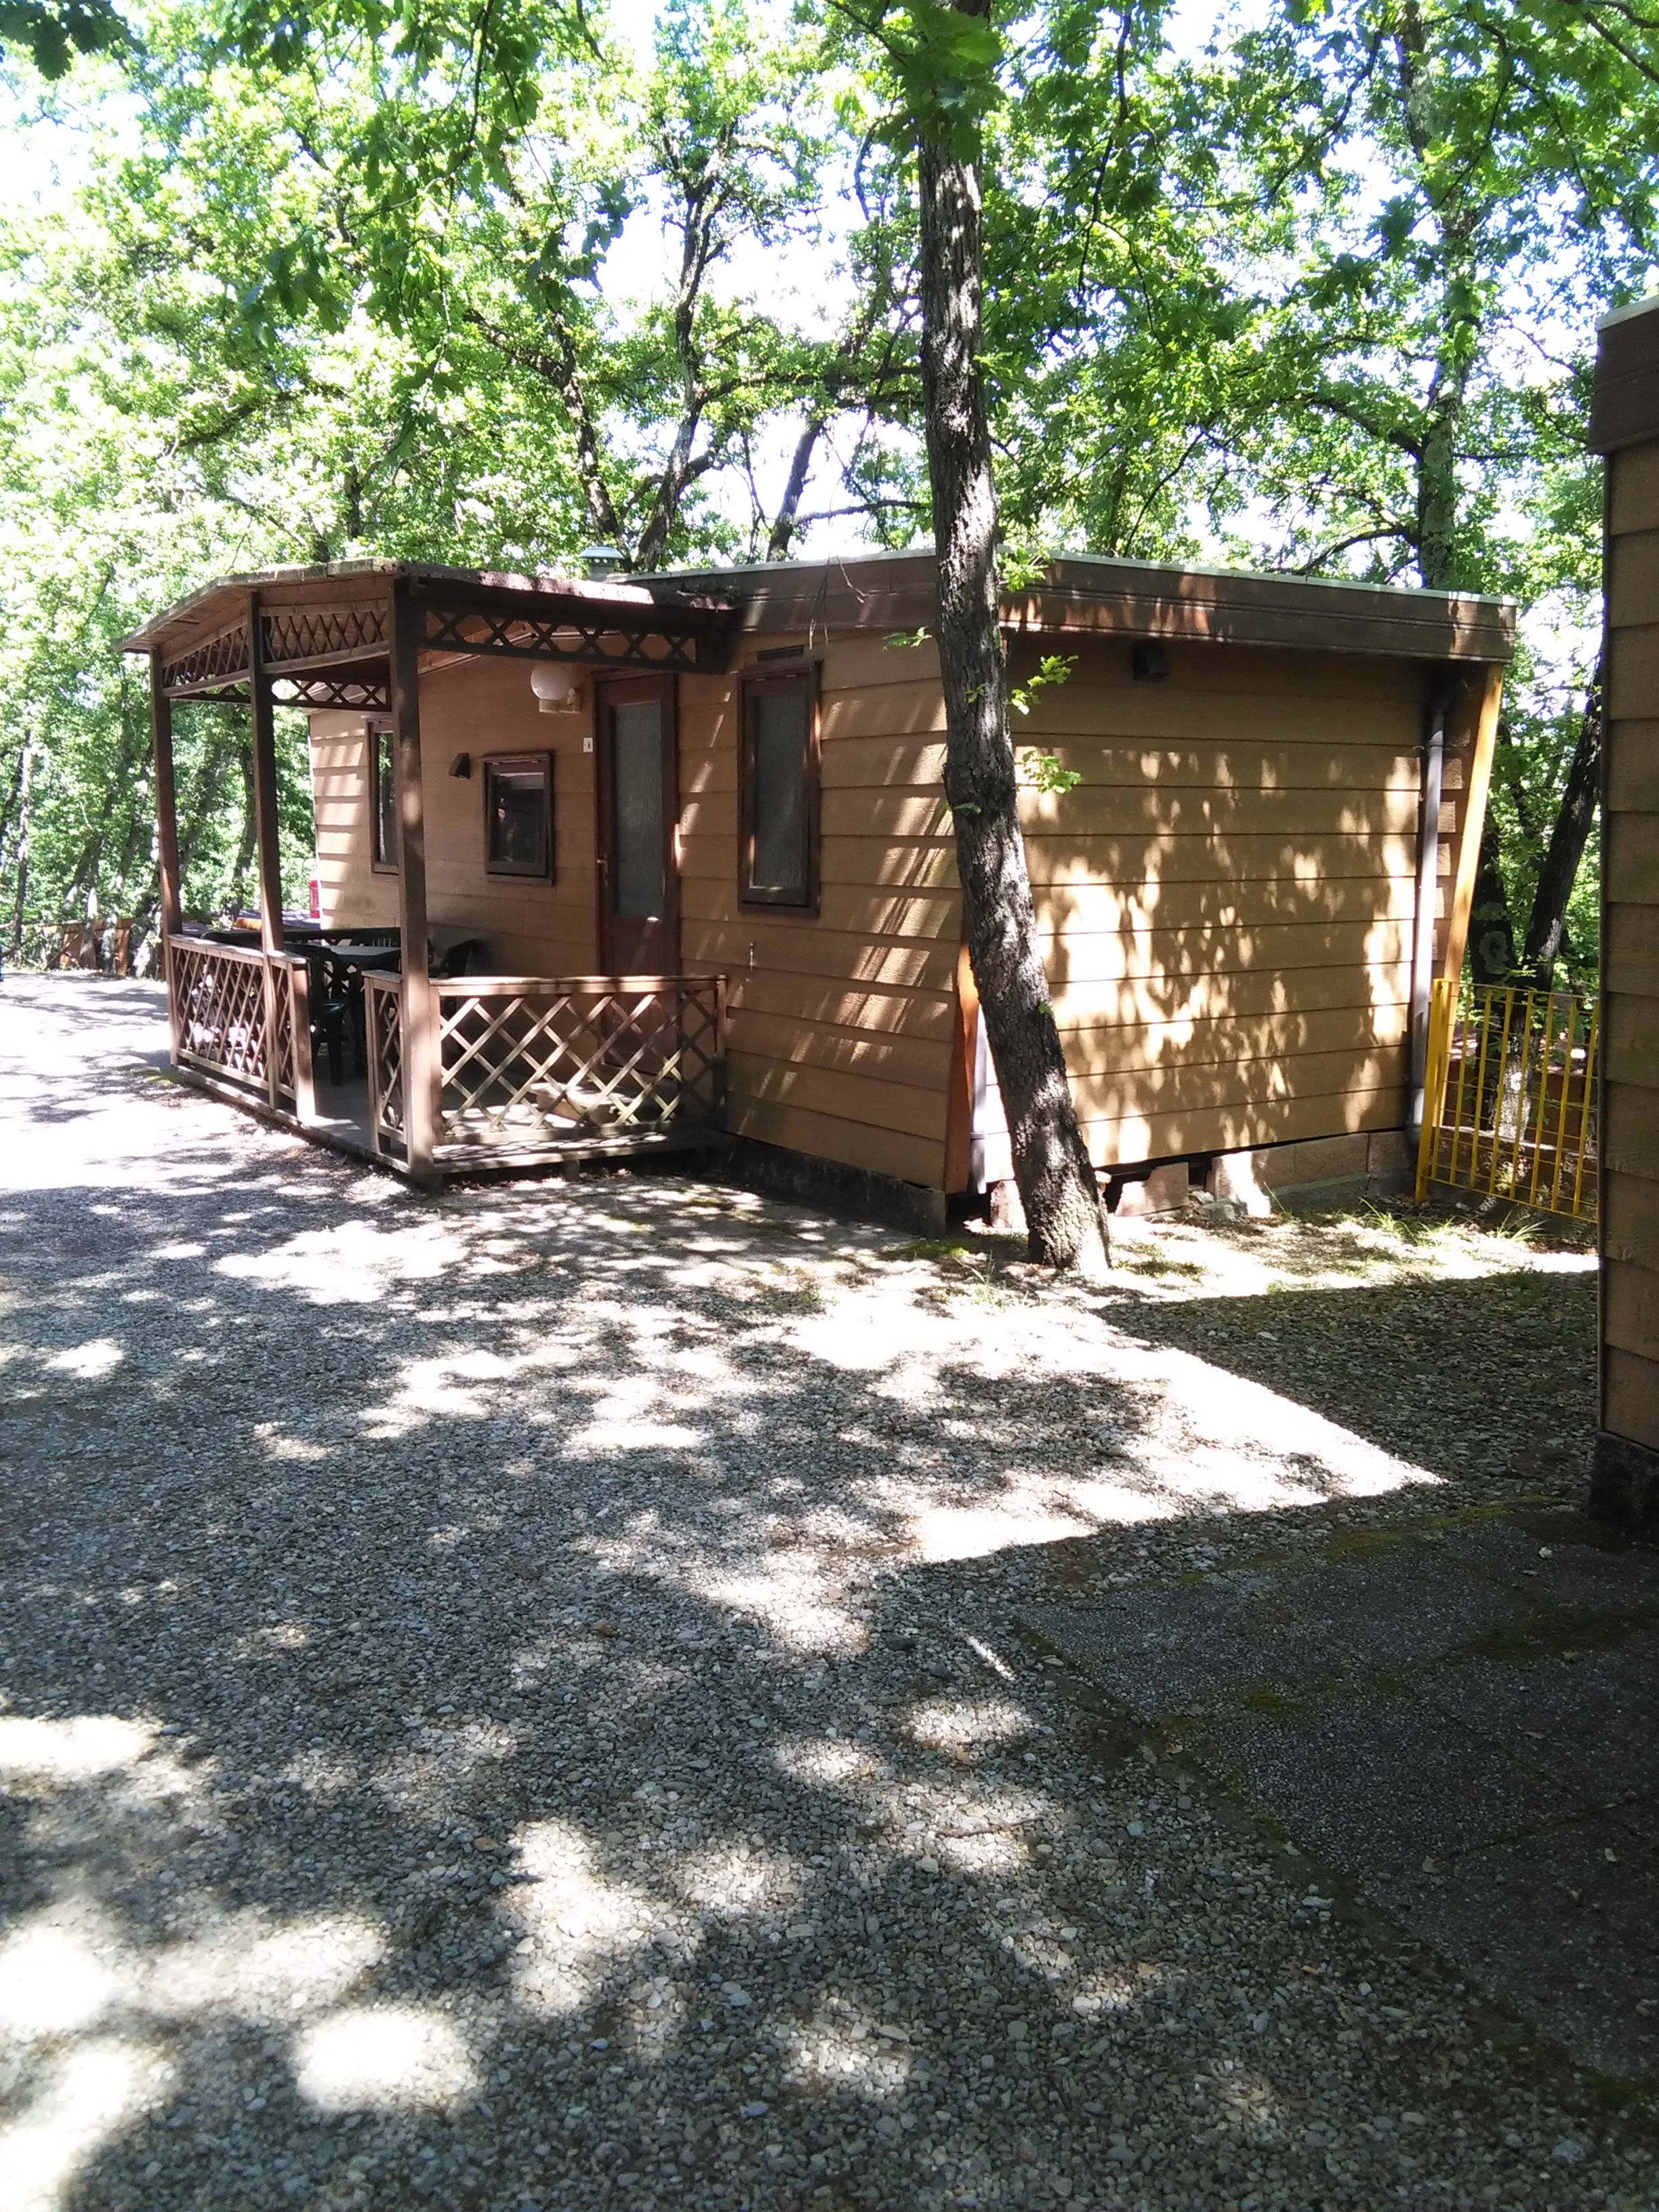 Huuraccommodatie - Stacaravan Standard - Camping Village Internazionale Firenze